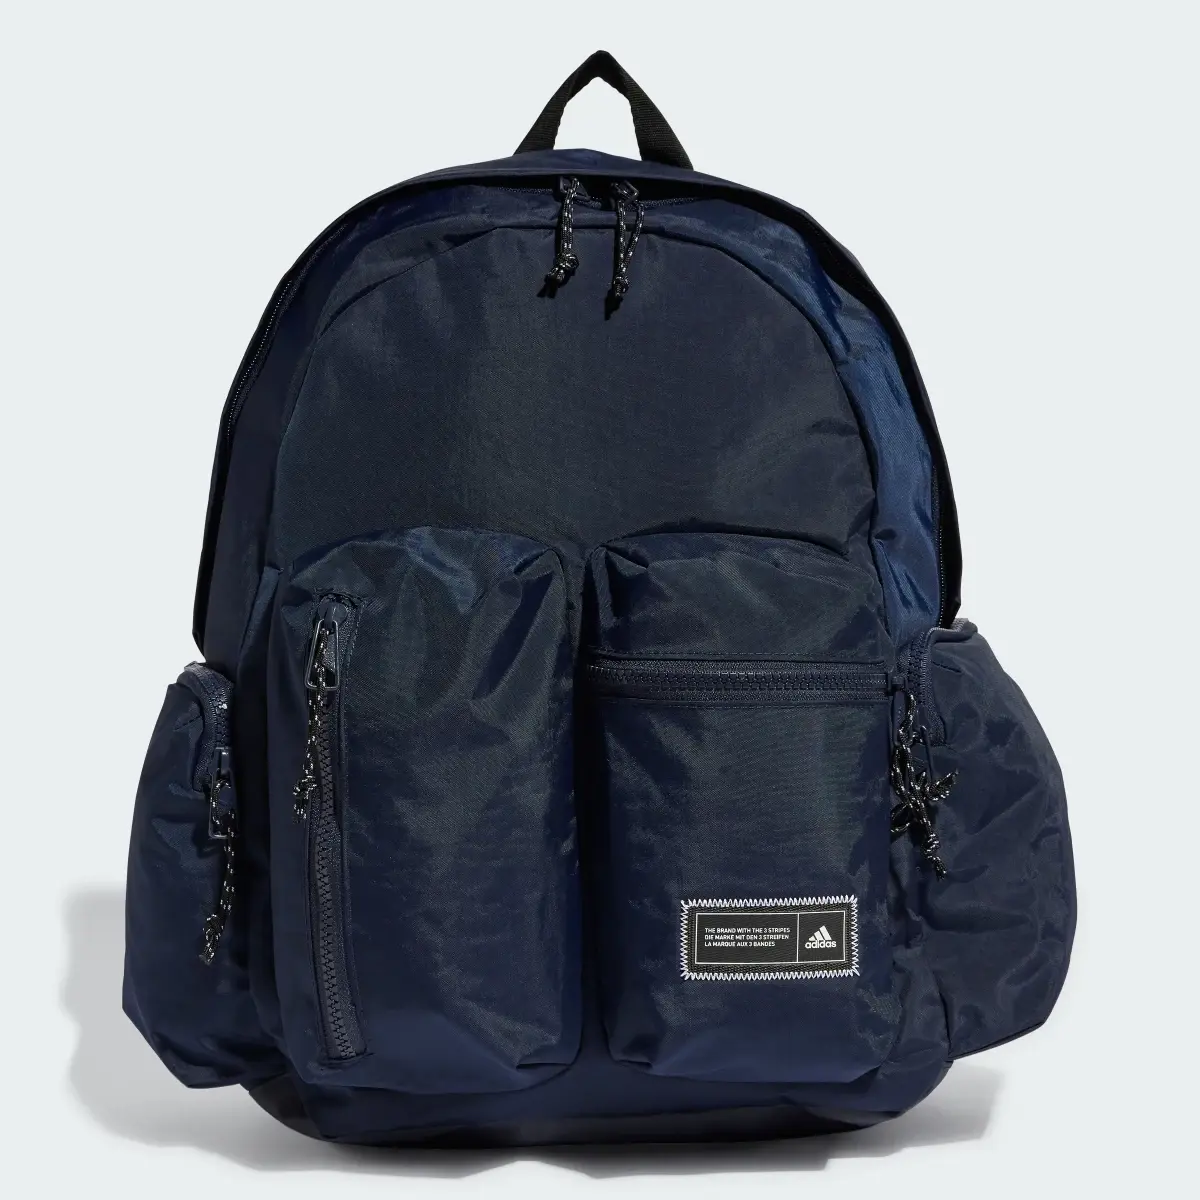 Adidas Classic BTU Backpack. 2